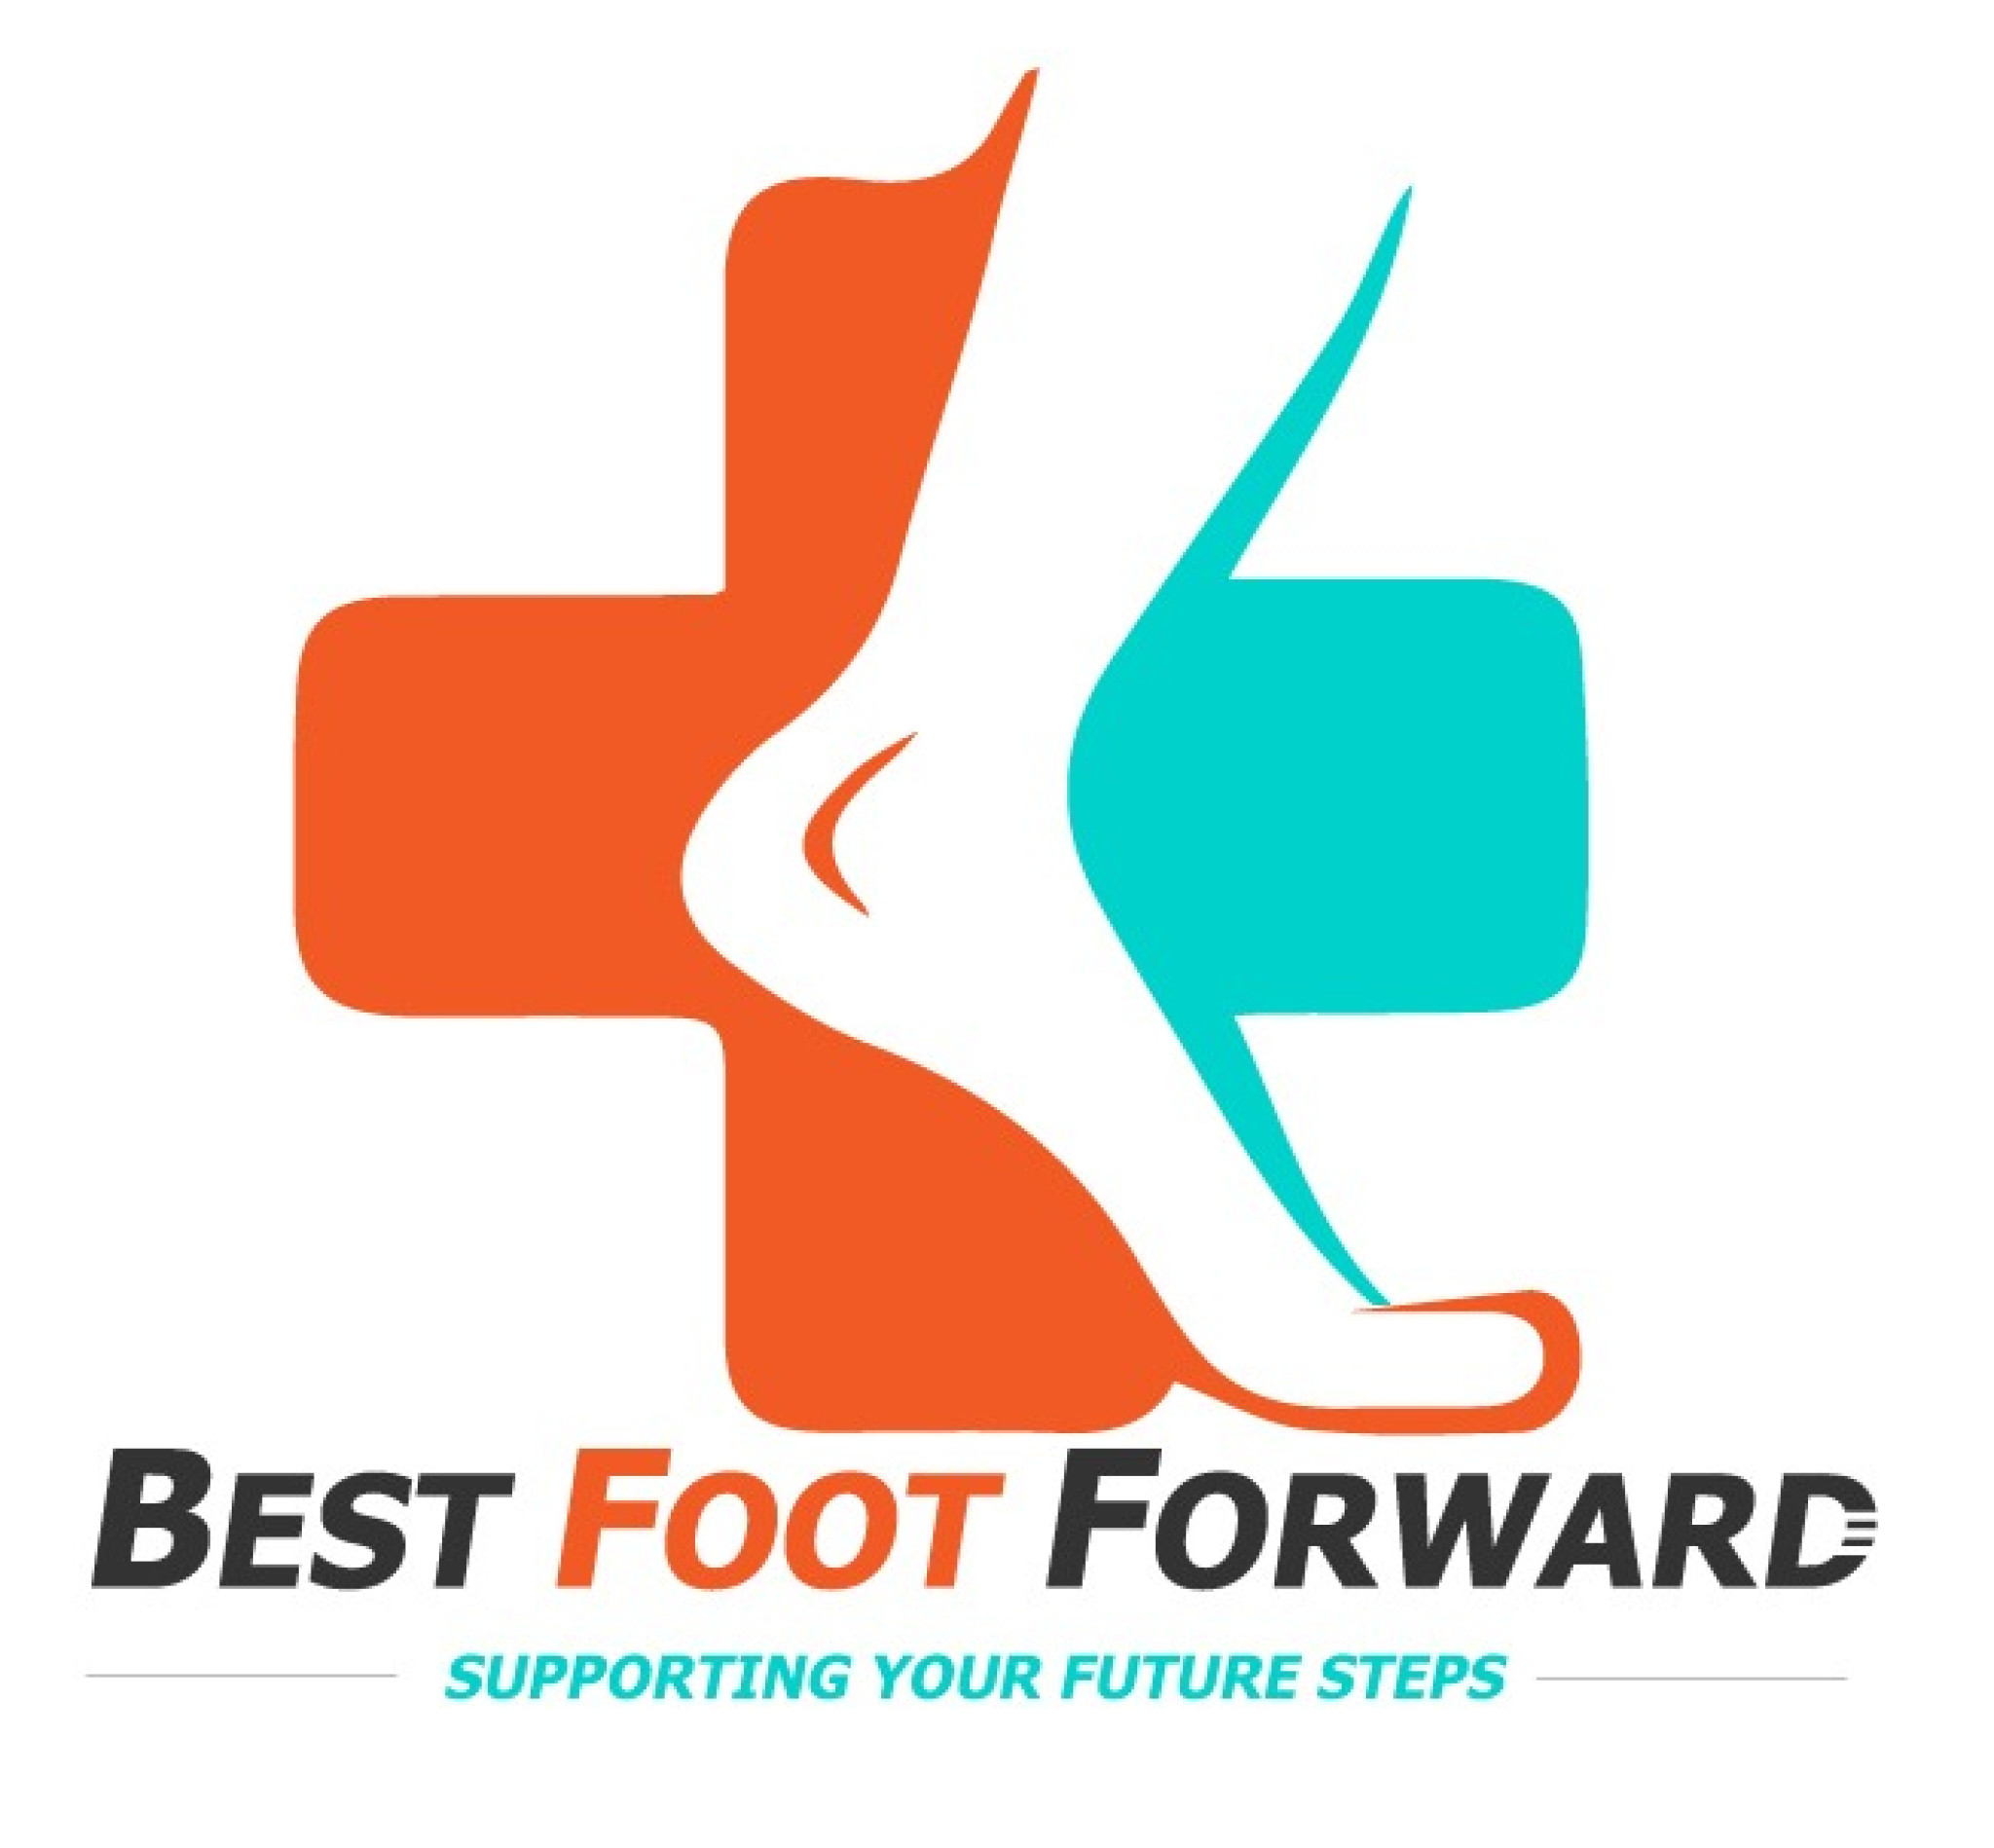 bestfootforward-logo-1687488673.jpg